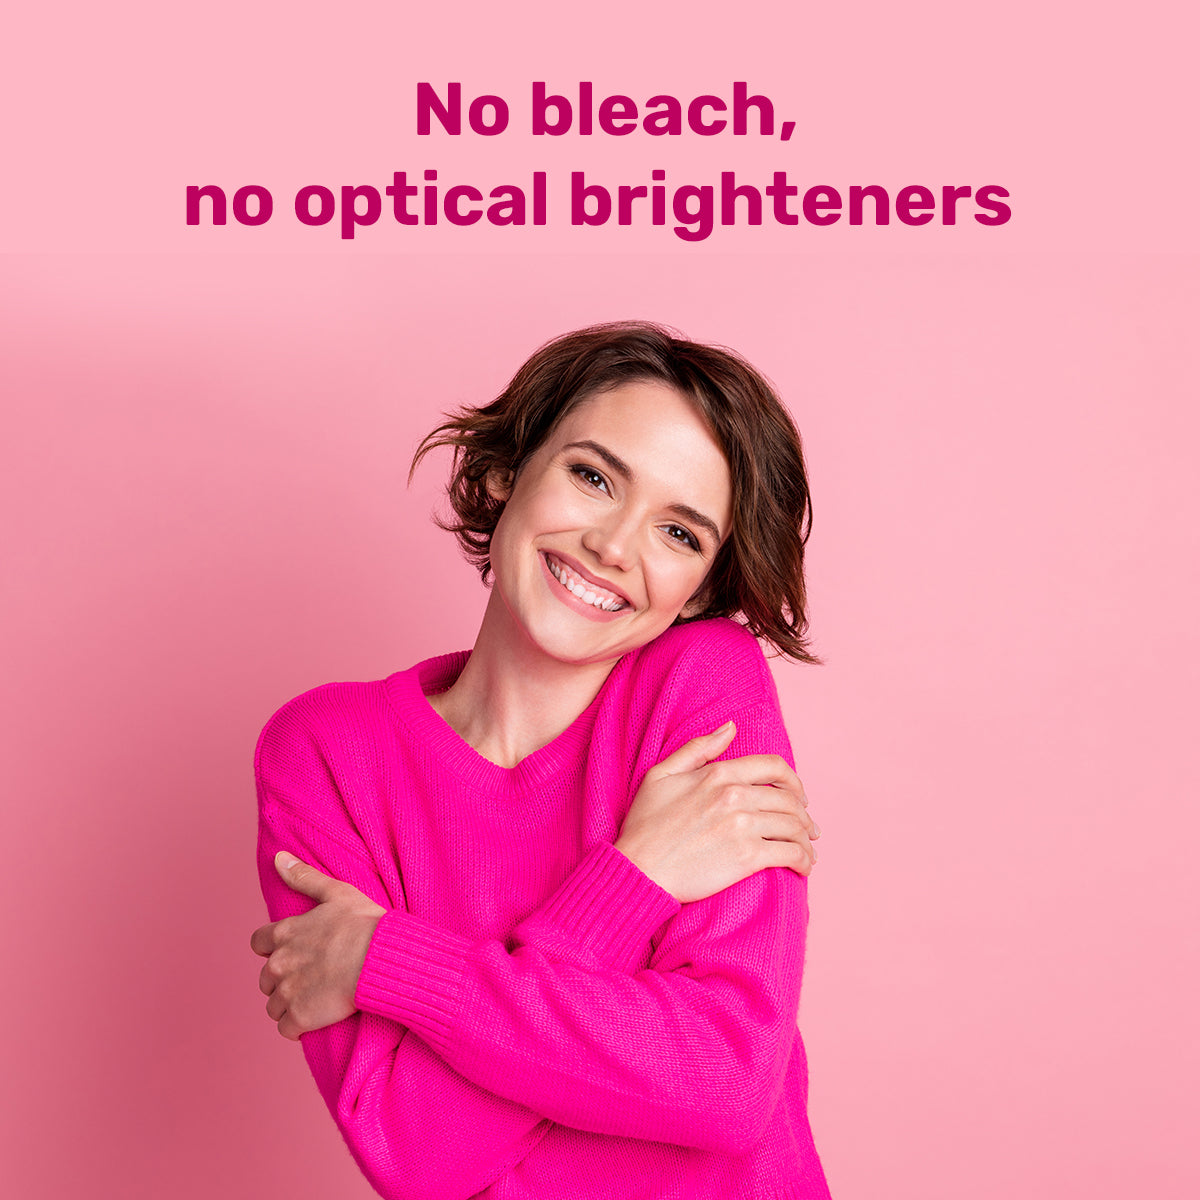 Bleach-free, No Optical Brighteners Laundry Liquid